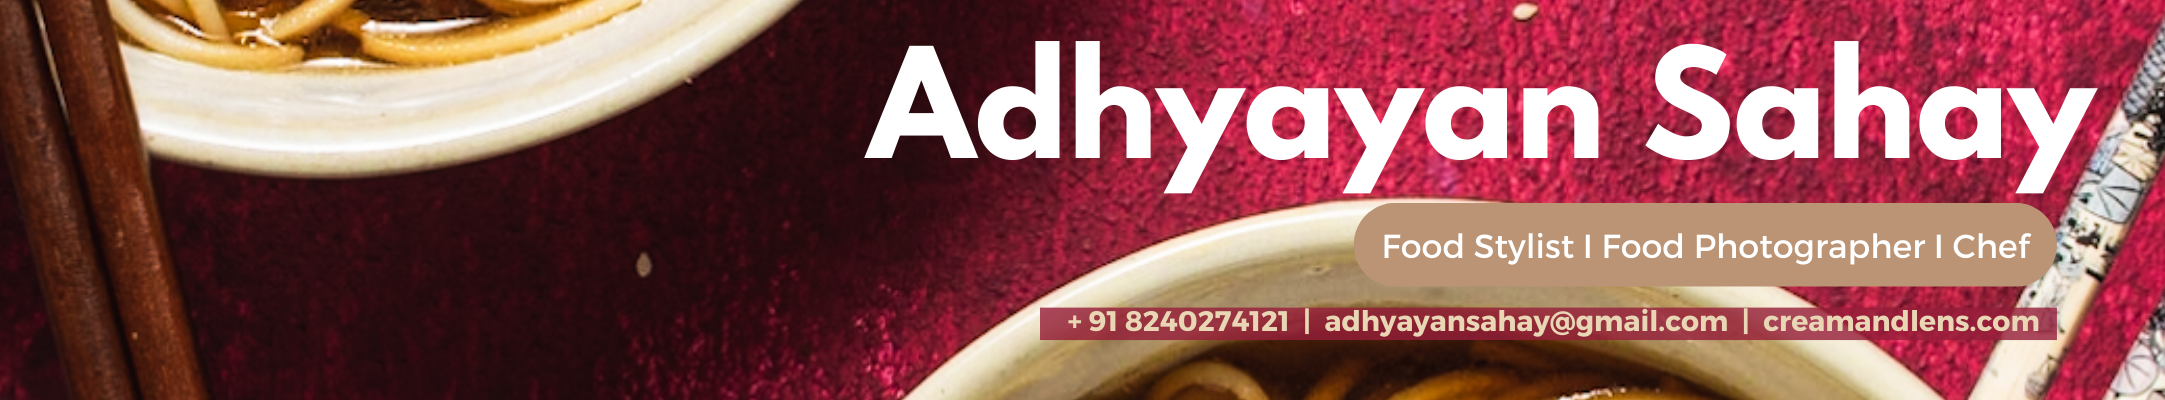 Adhyayan Sahay's profile banner